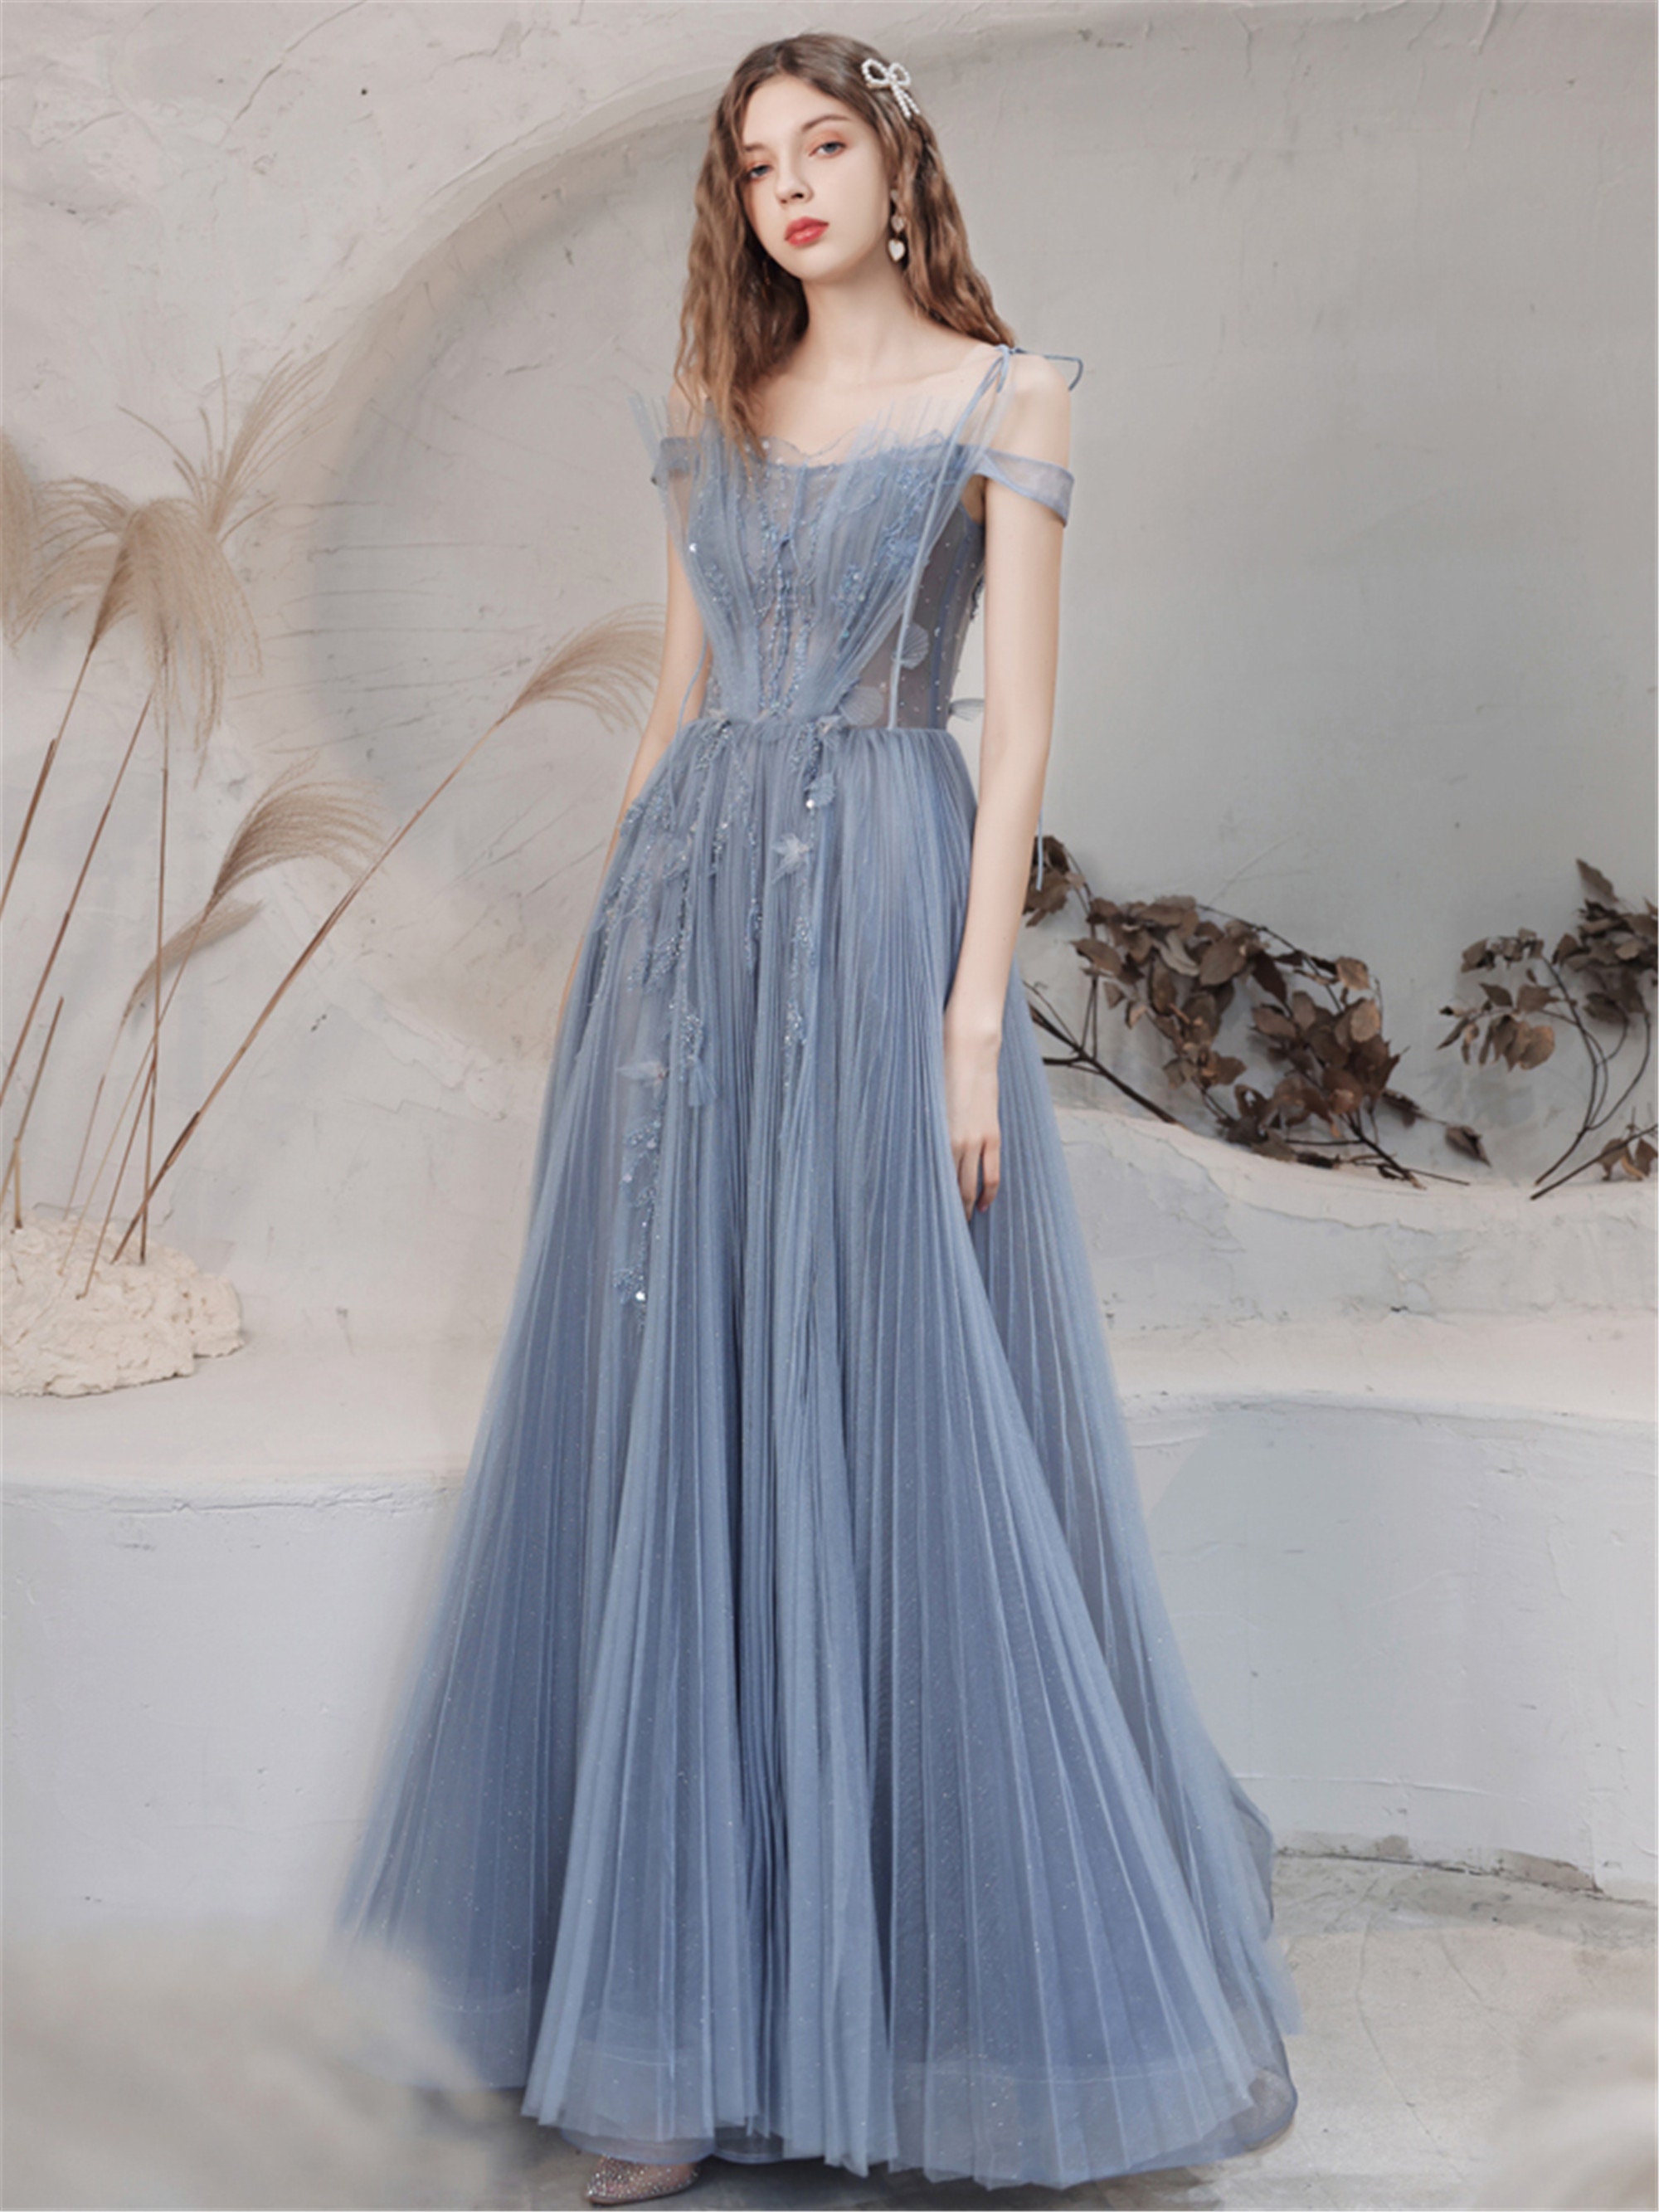 Blue Fairy Prom Dress for Women Long ...